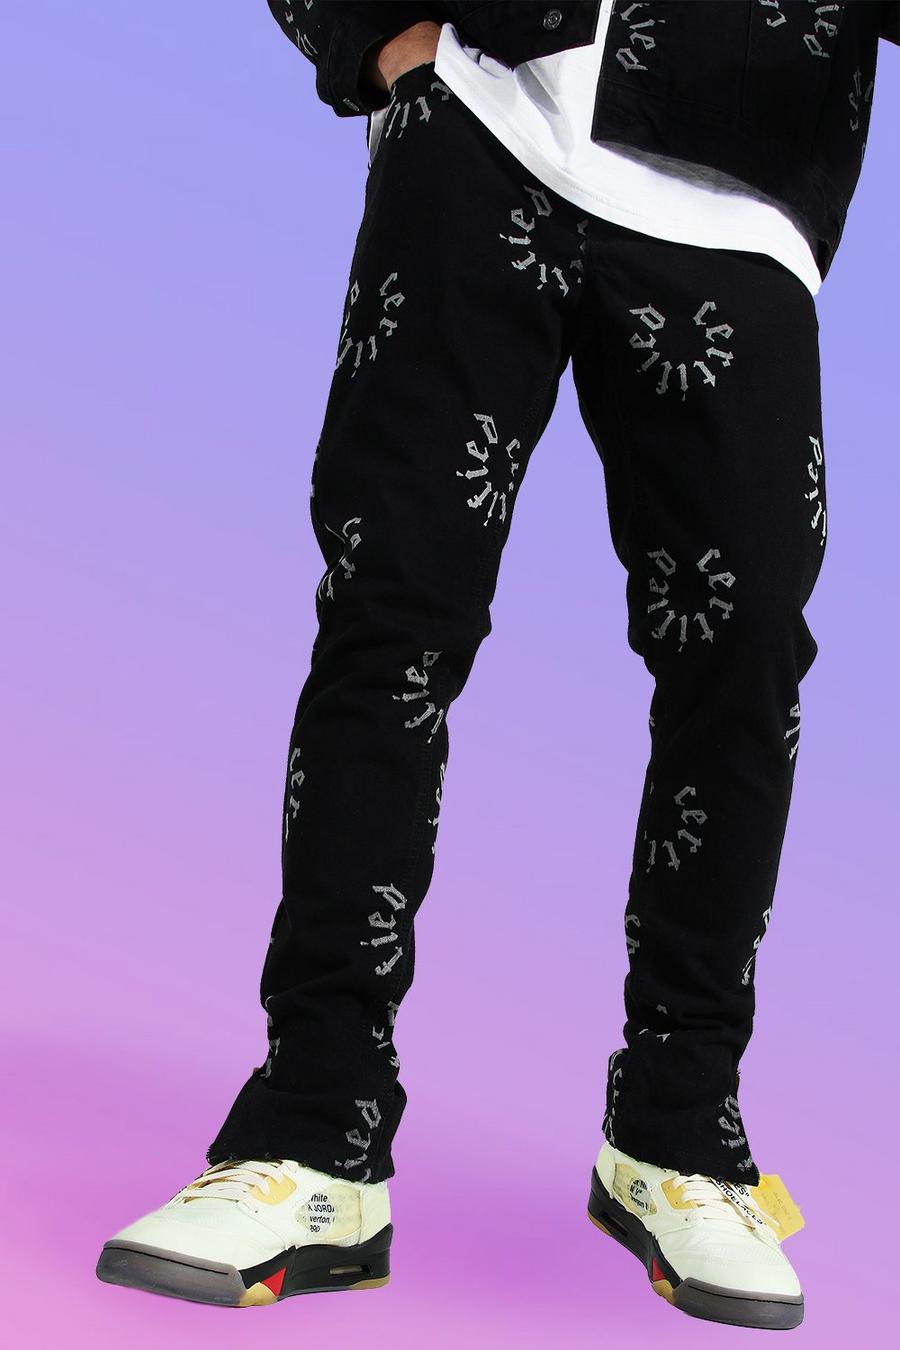 שחור אמיתי סקיני ג'ינס מבד קשיח עם כיתוב Certified image number 1